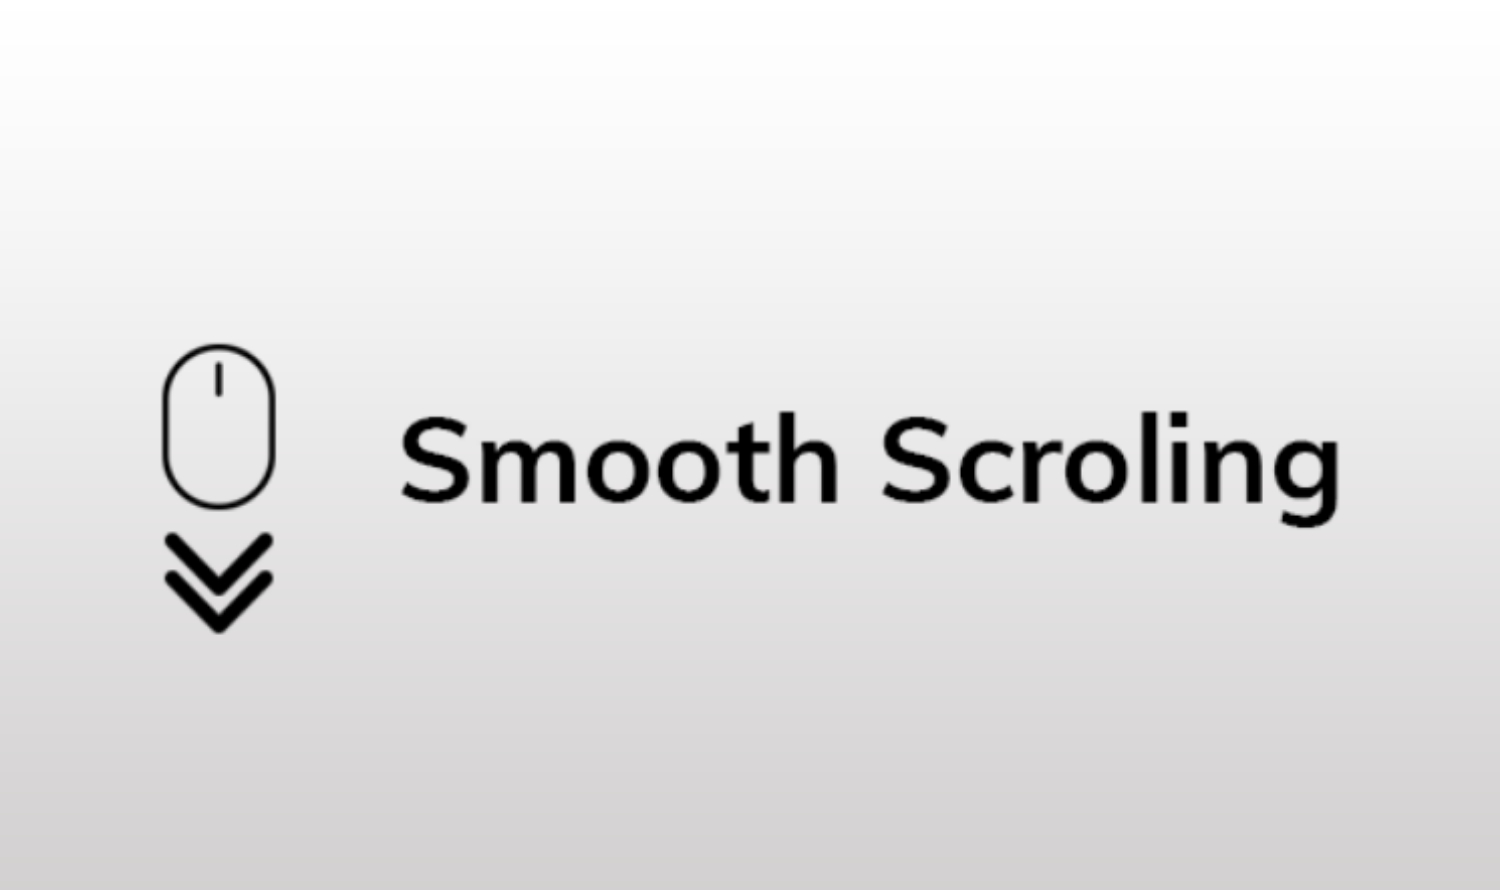 understanding smooth scrolling